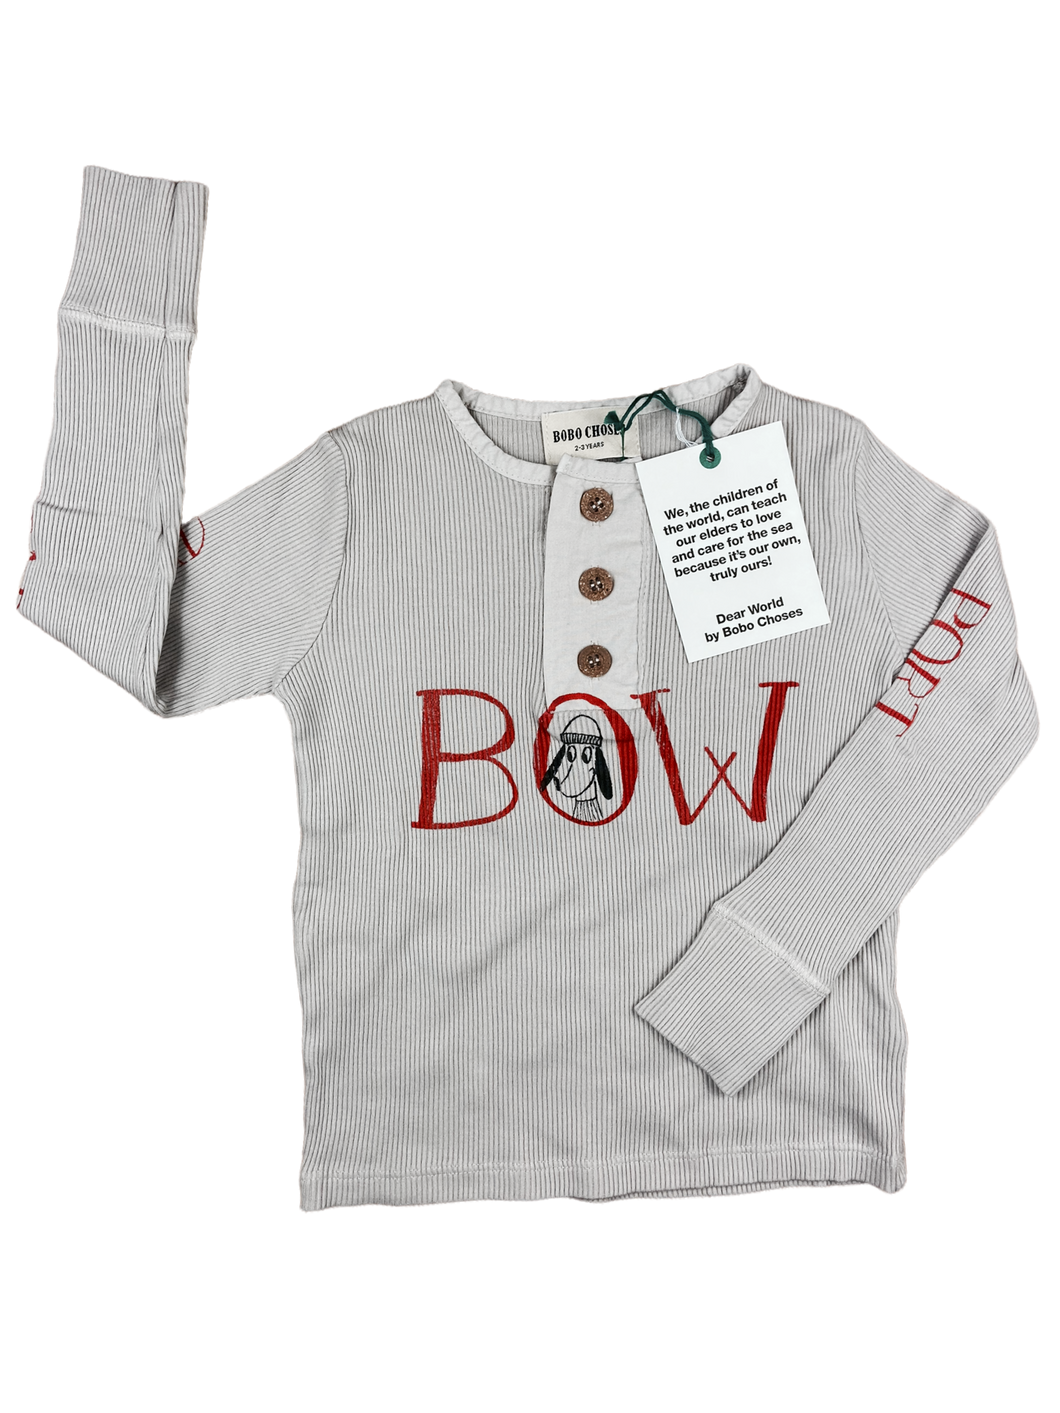 BOBO Choses Shirt Sale Second Hand Bow Kinder